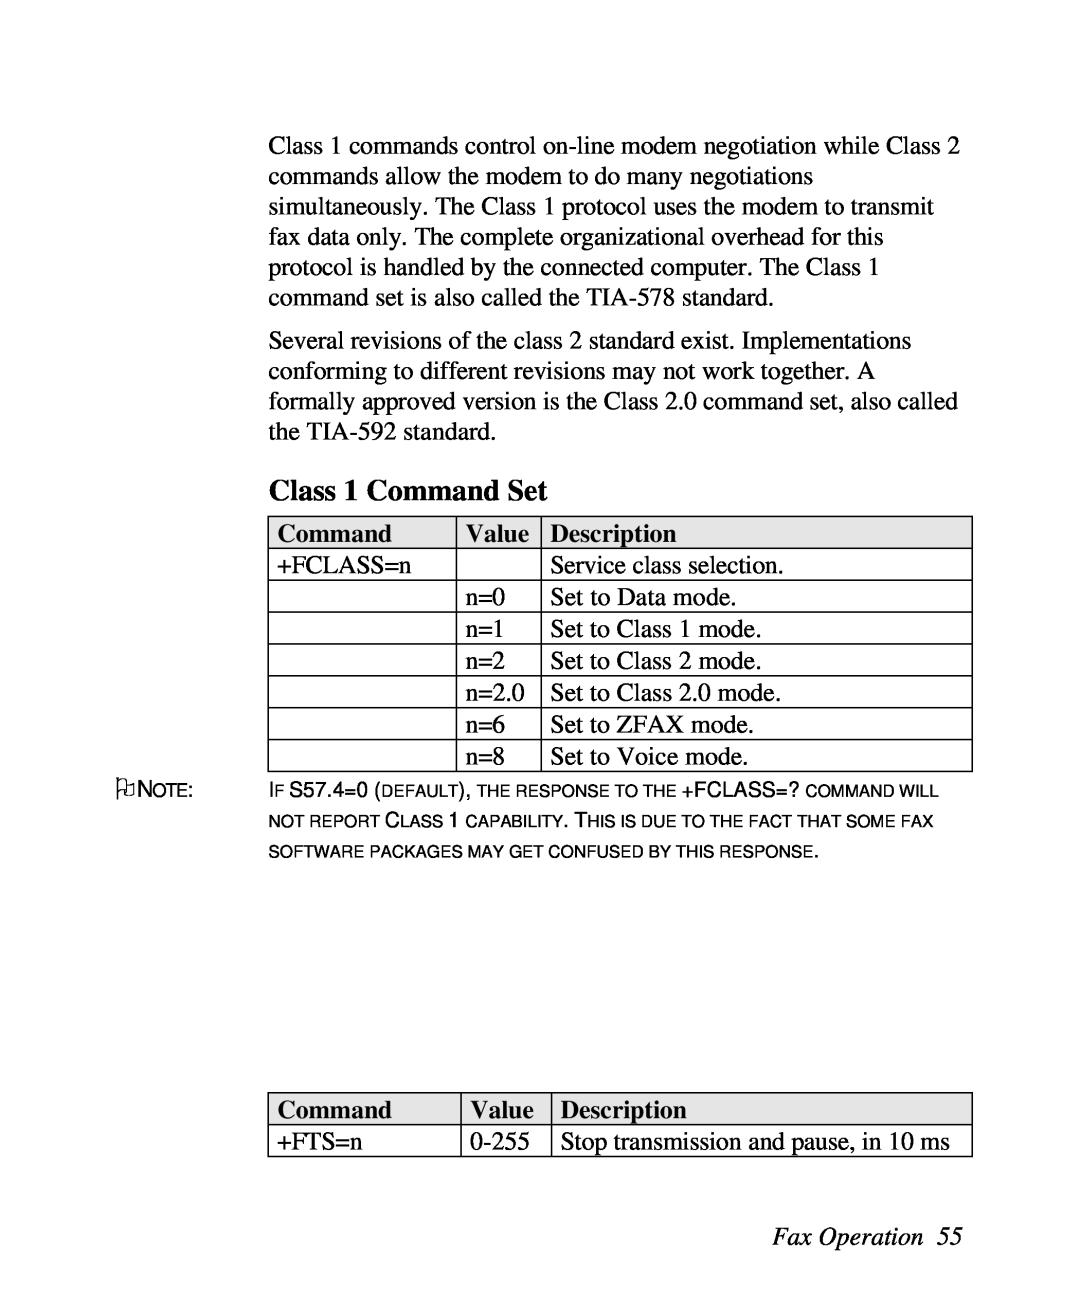 ZyXEL Communications U-336R/RE manual Class 1 Command Set, Fax Operation 